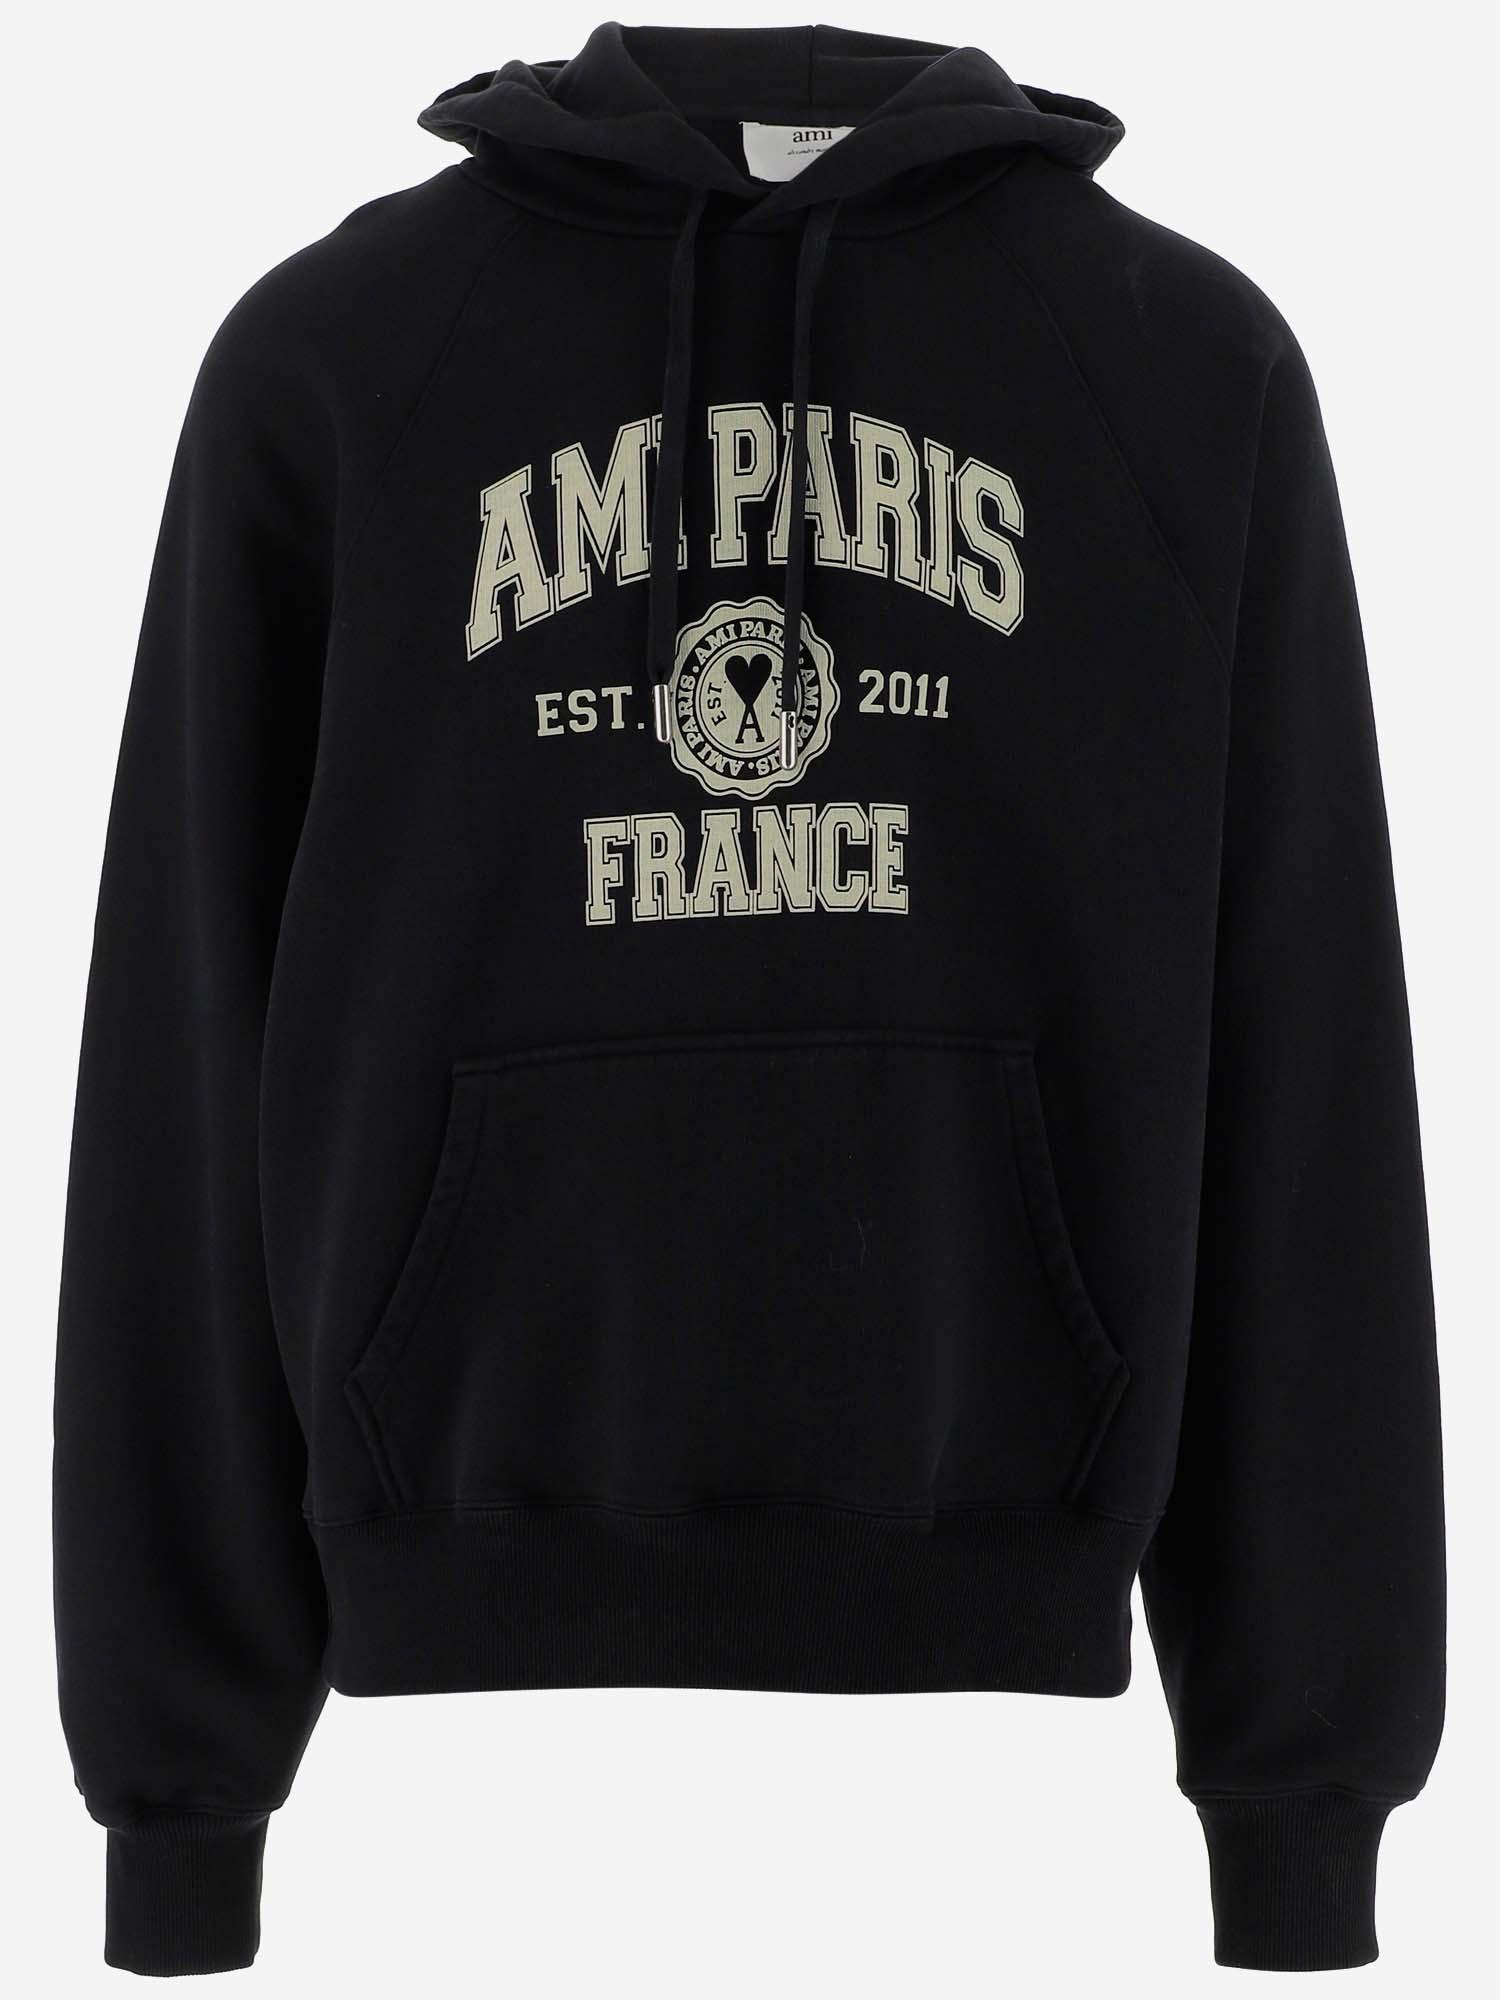 Ami Paris Paris France Sweatshirt in Black | Lyst